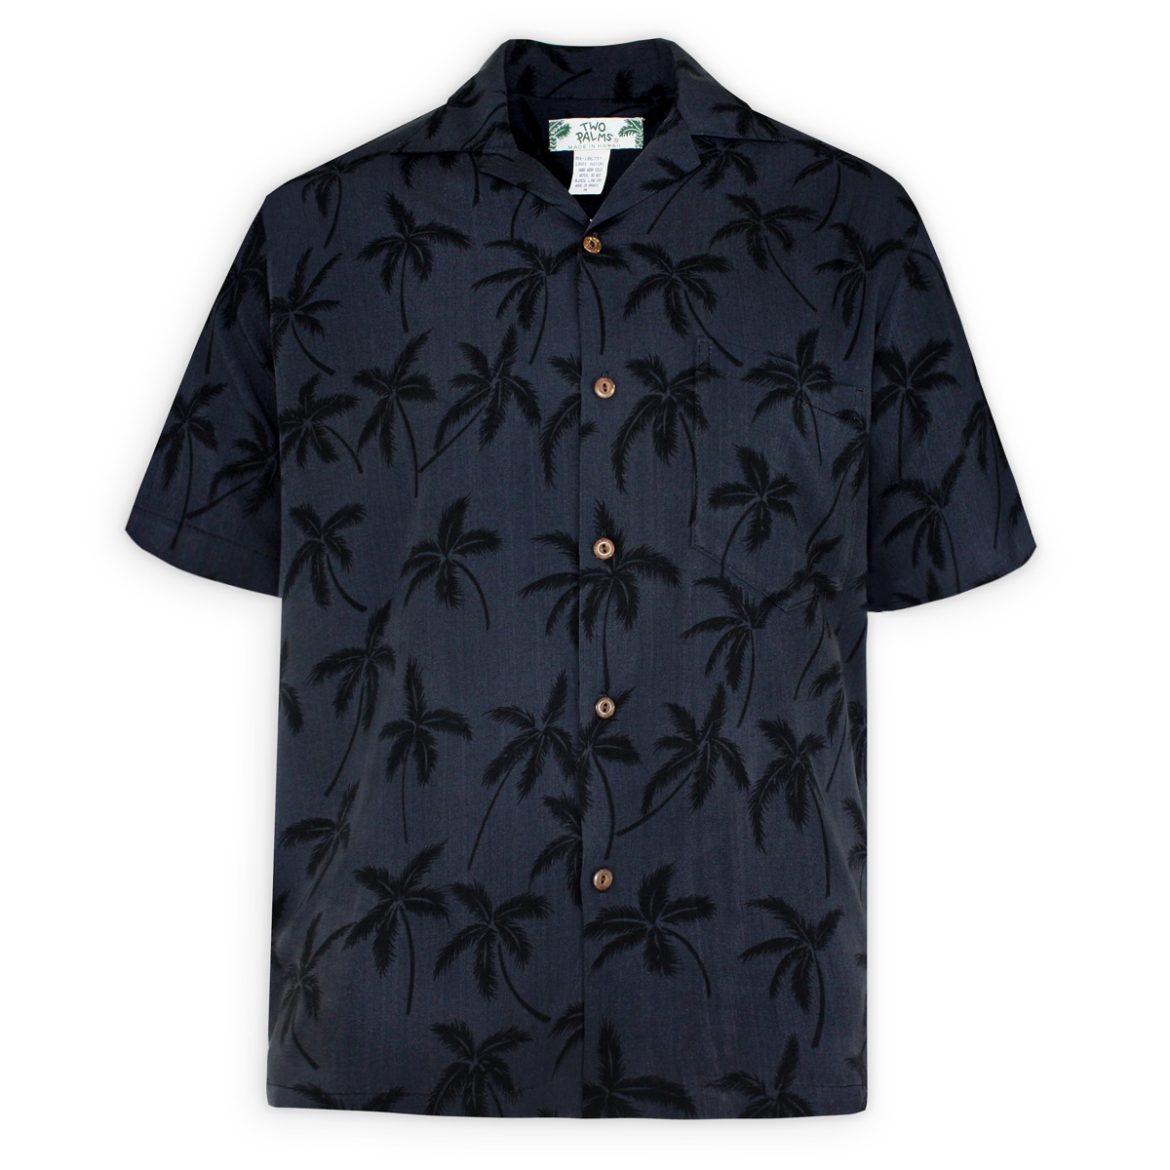 Mens Hawaiian Shirt - Island Palms - Black